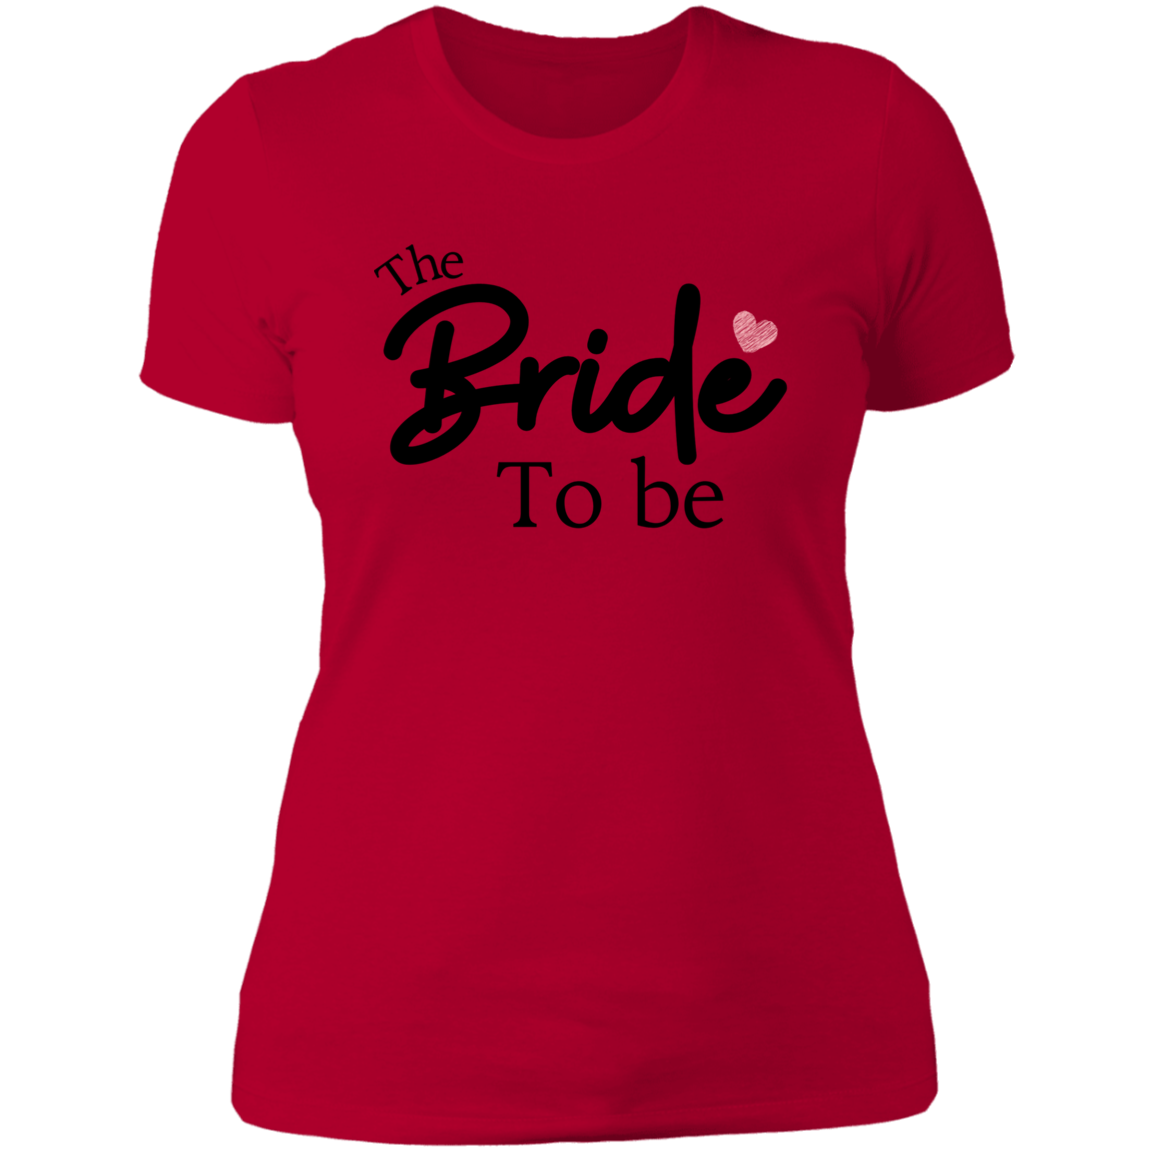 The Bride To Be ~ Boyfriend T-Shirt, Wedding , Wedding Attire, Gift for Her